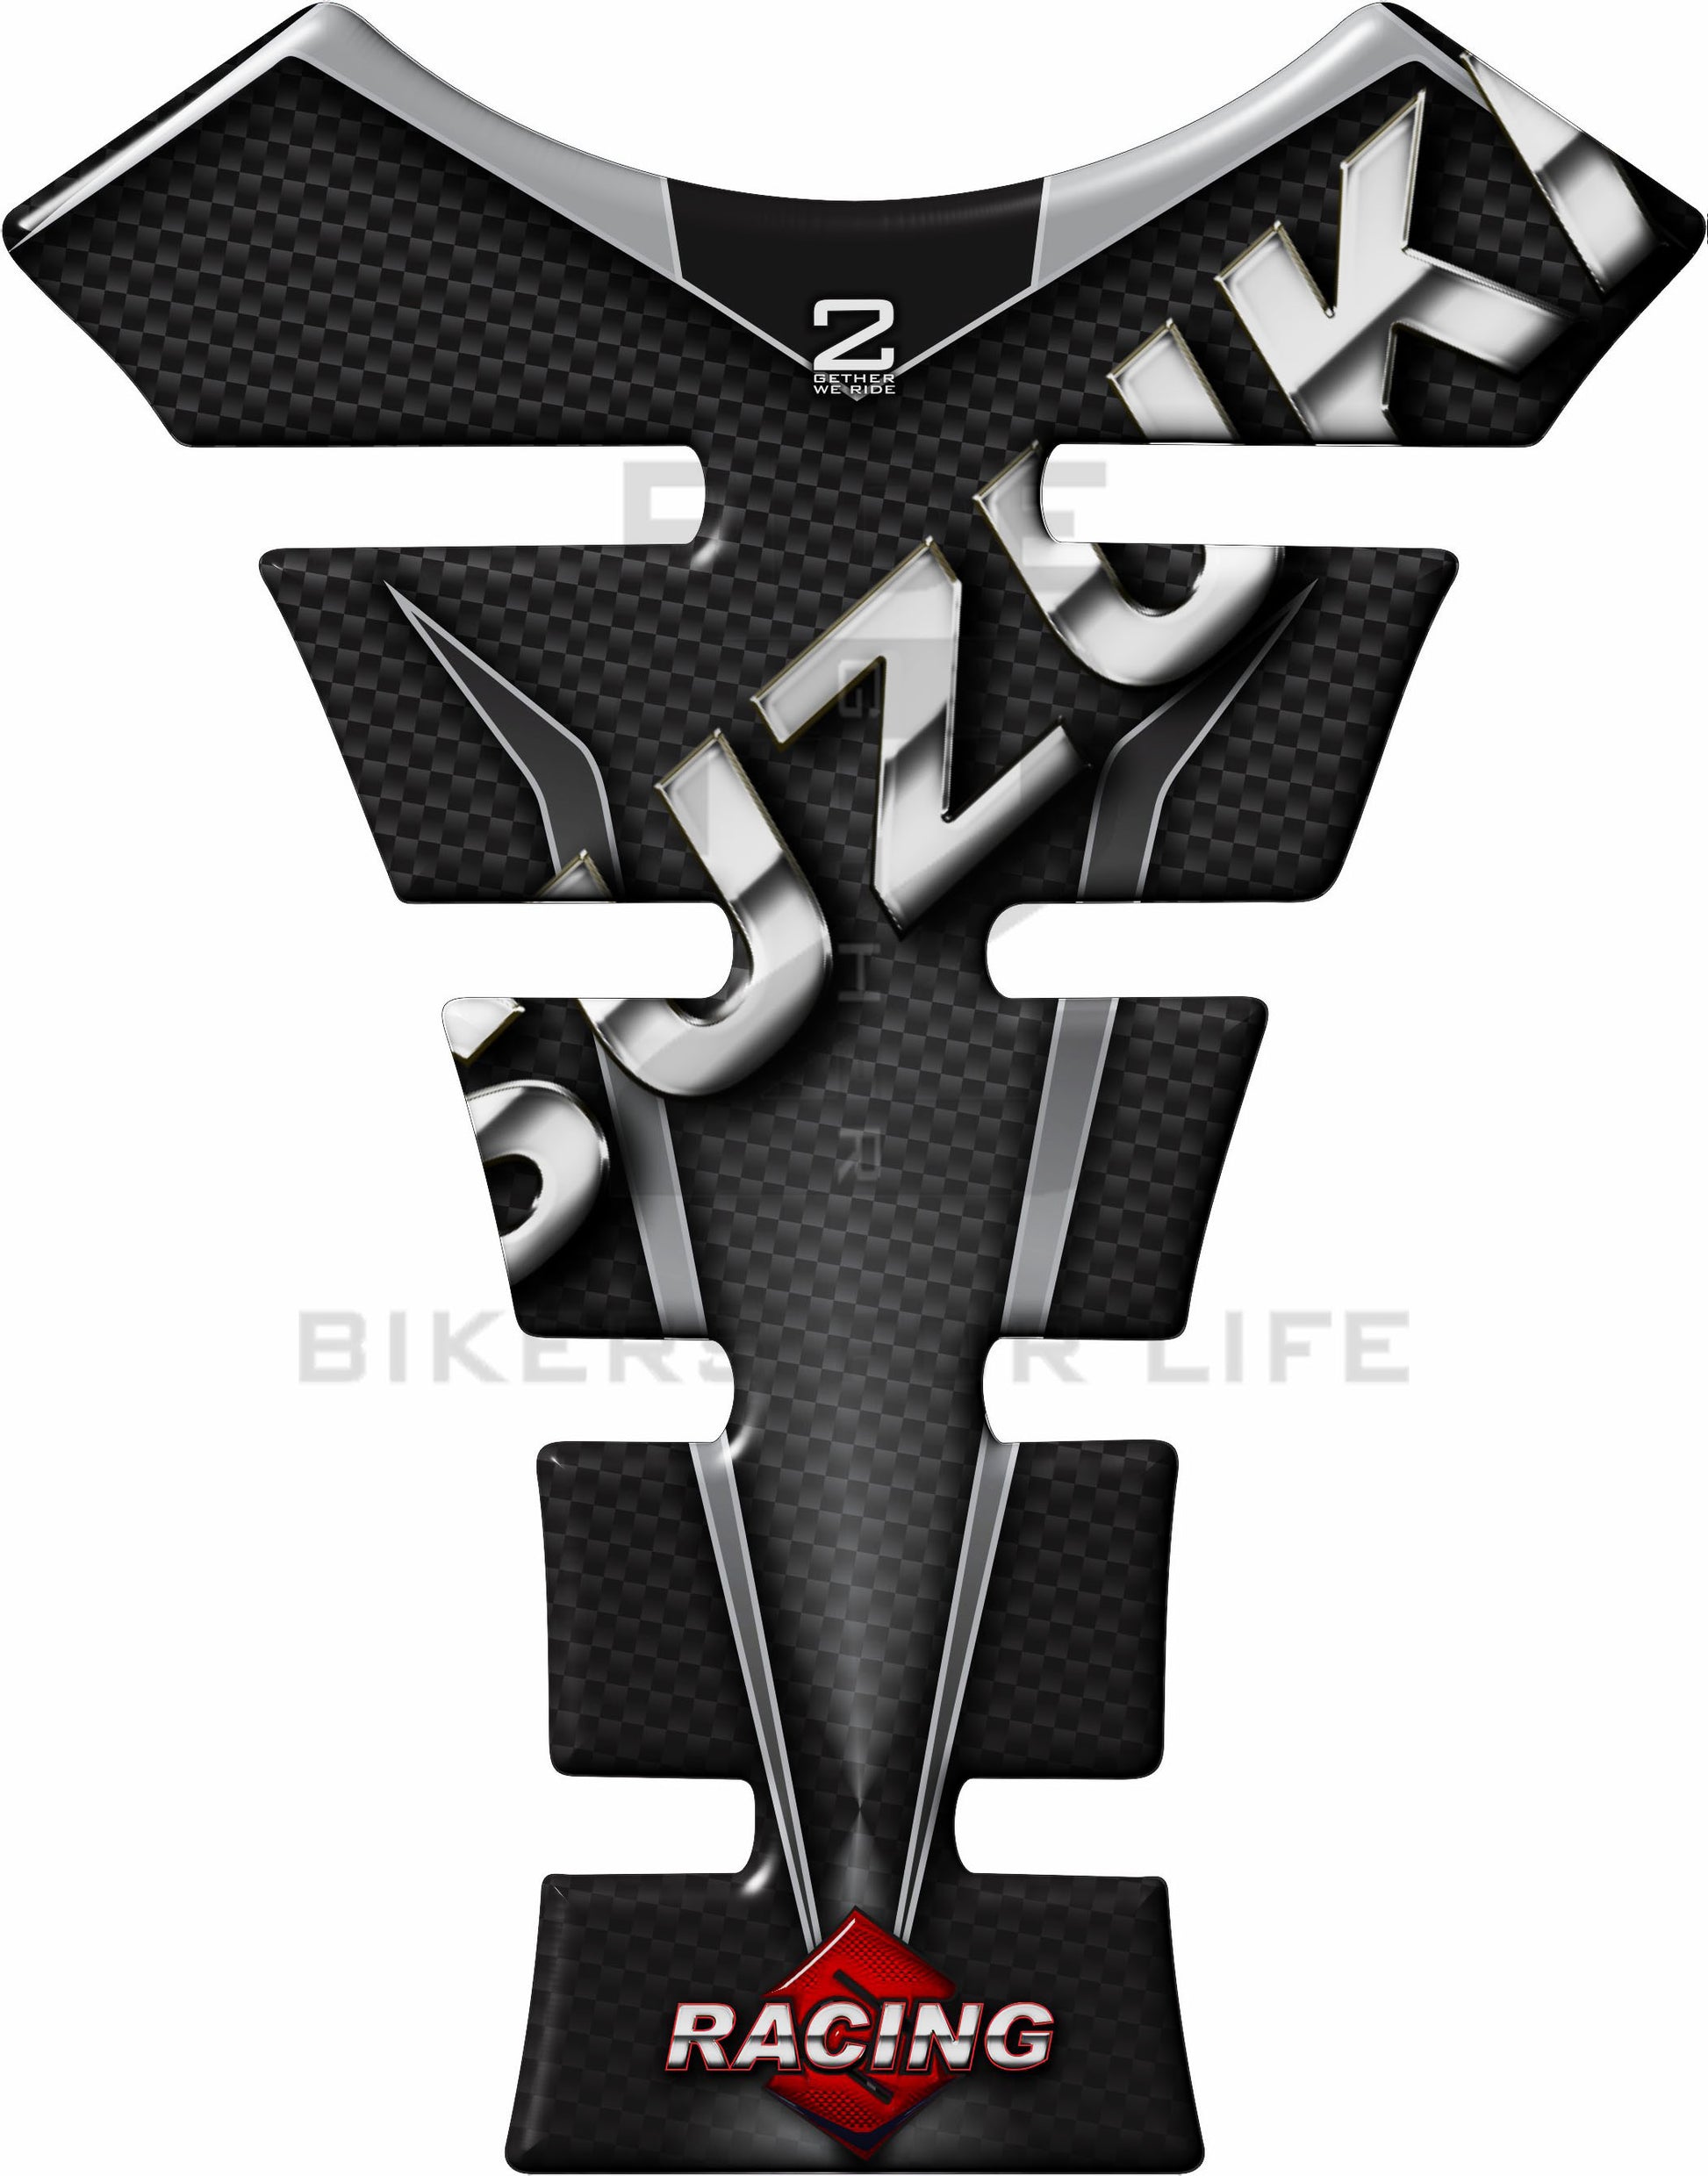 Suzuki Black and Chrome Carbon Fibre Motor Bike Tank Pad Protector. Fits 1990 - 2023 models.